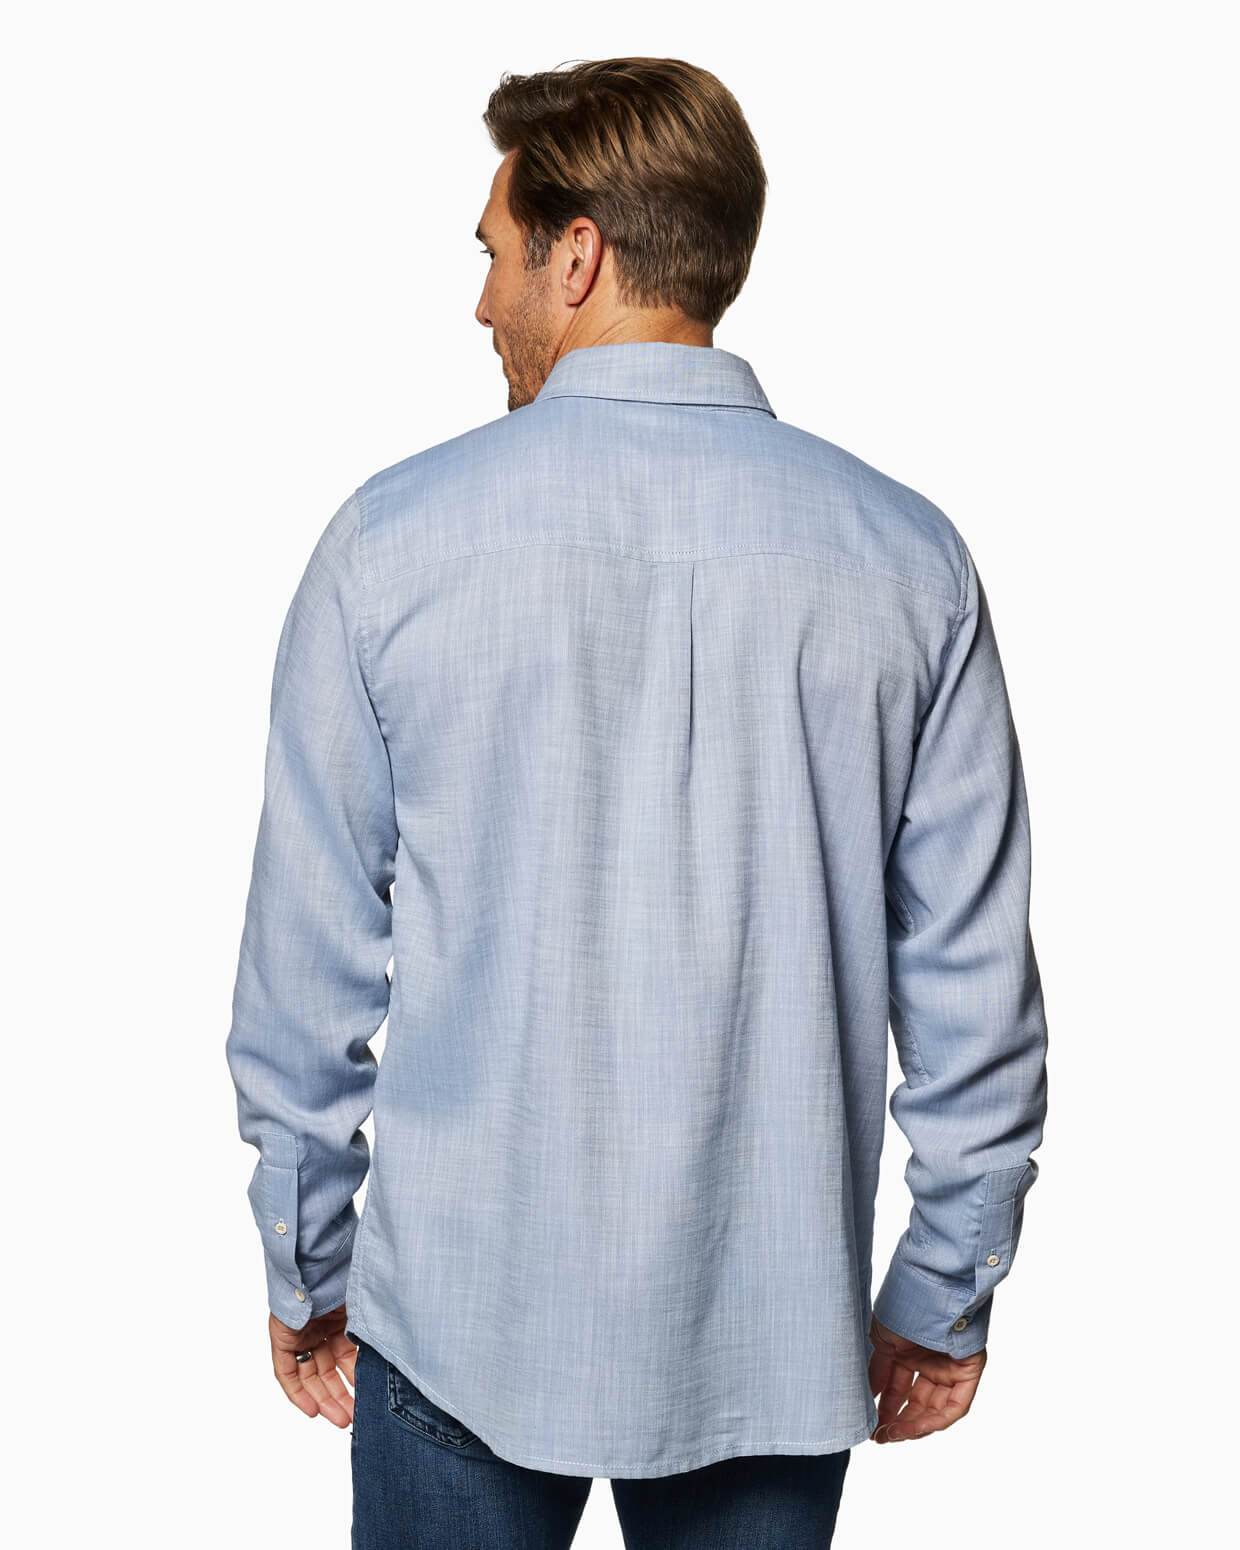 Breezeway Long Sleeve Shirt